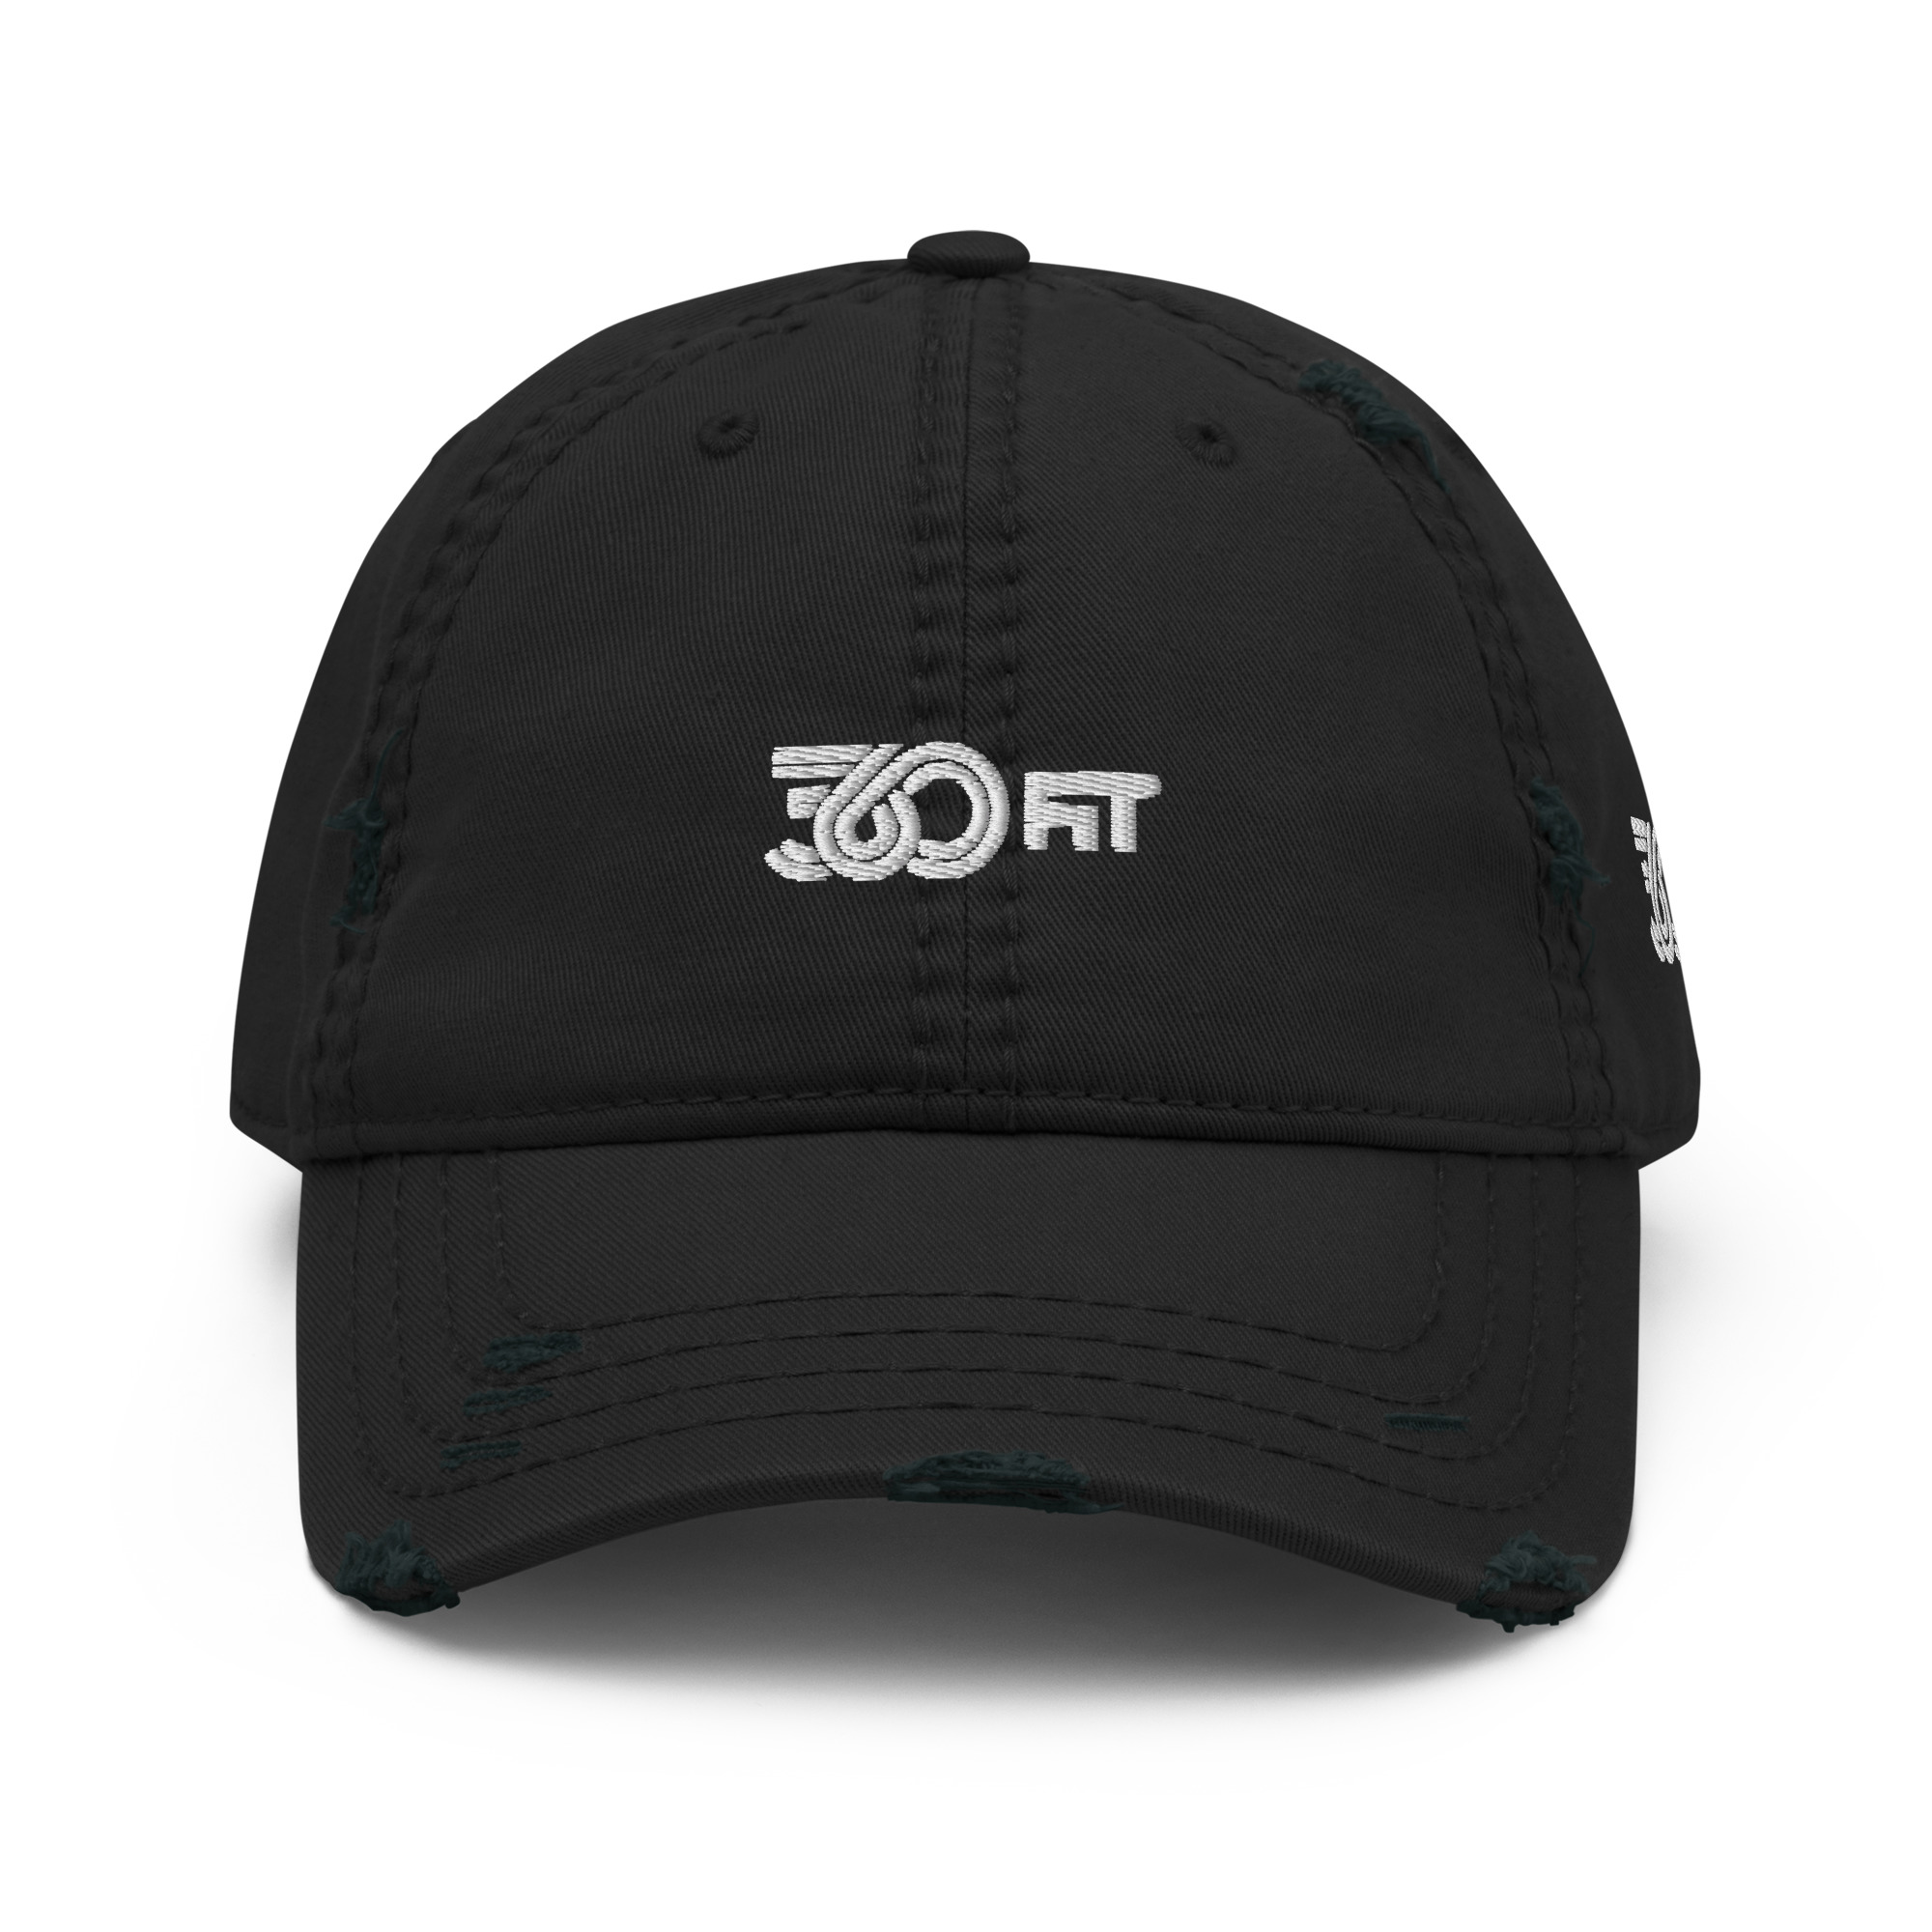 distressed-dad-hat-black-front-63d14f00582de